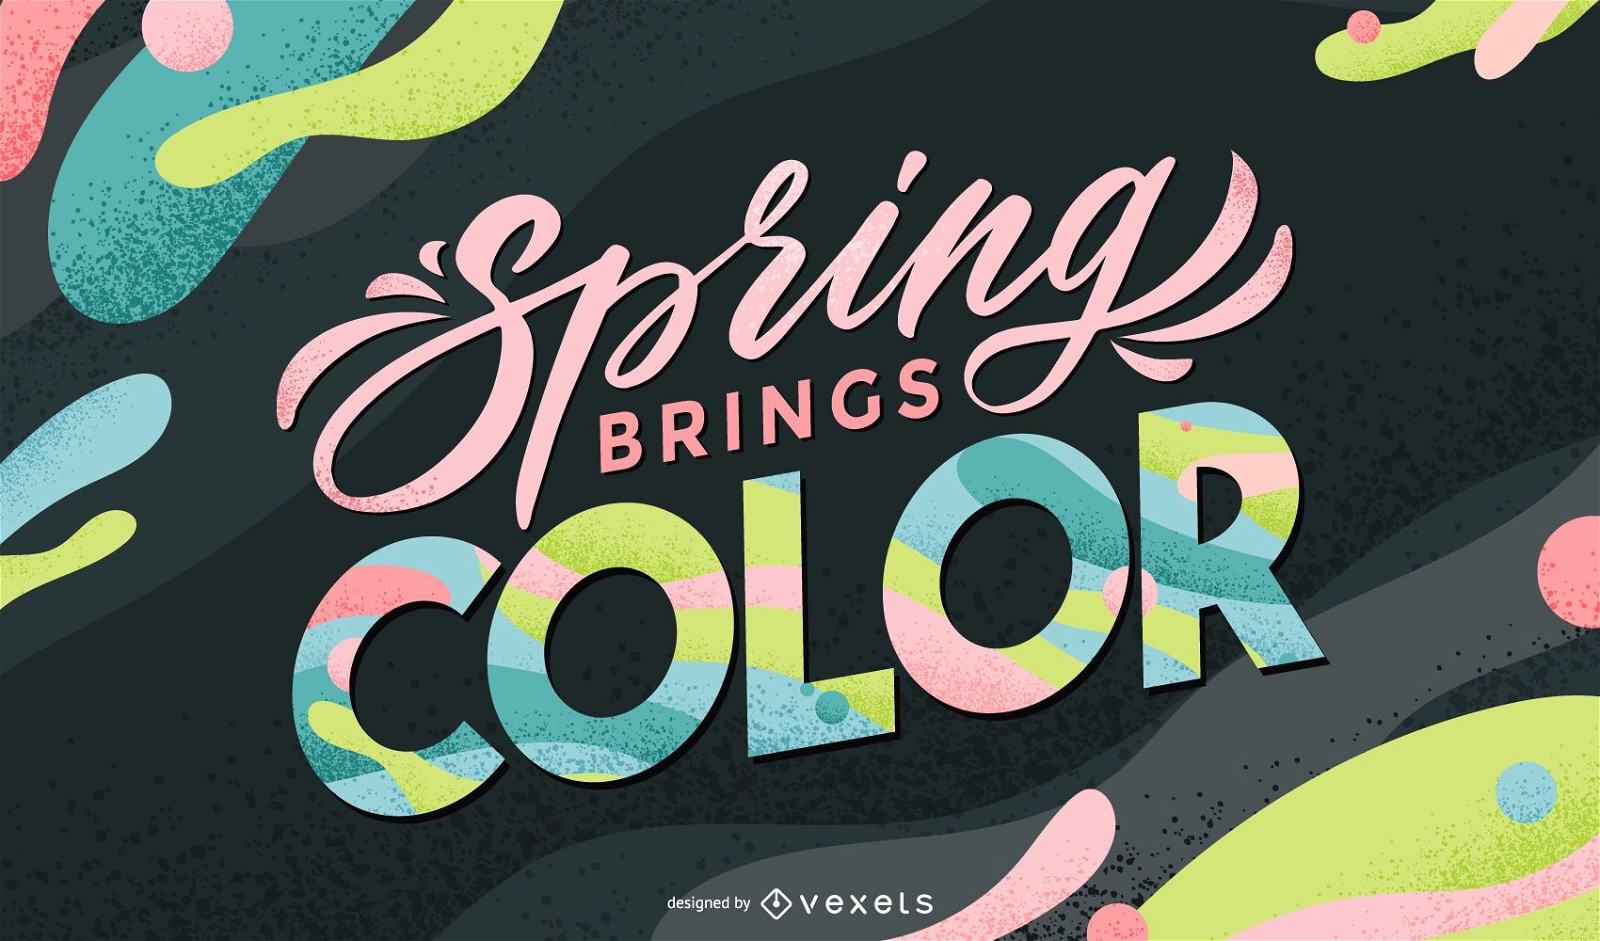 A primavera traz o design de letras coloridas